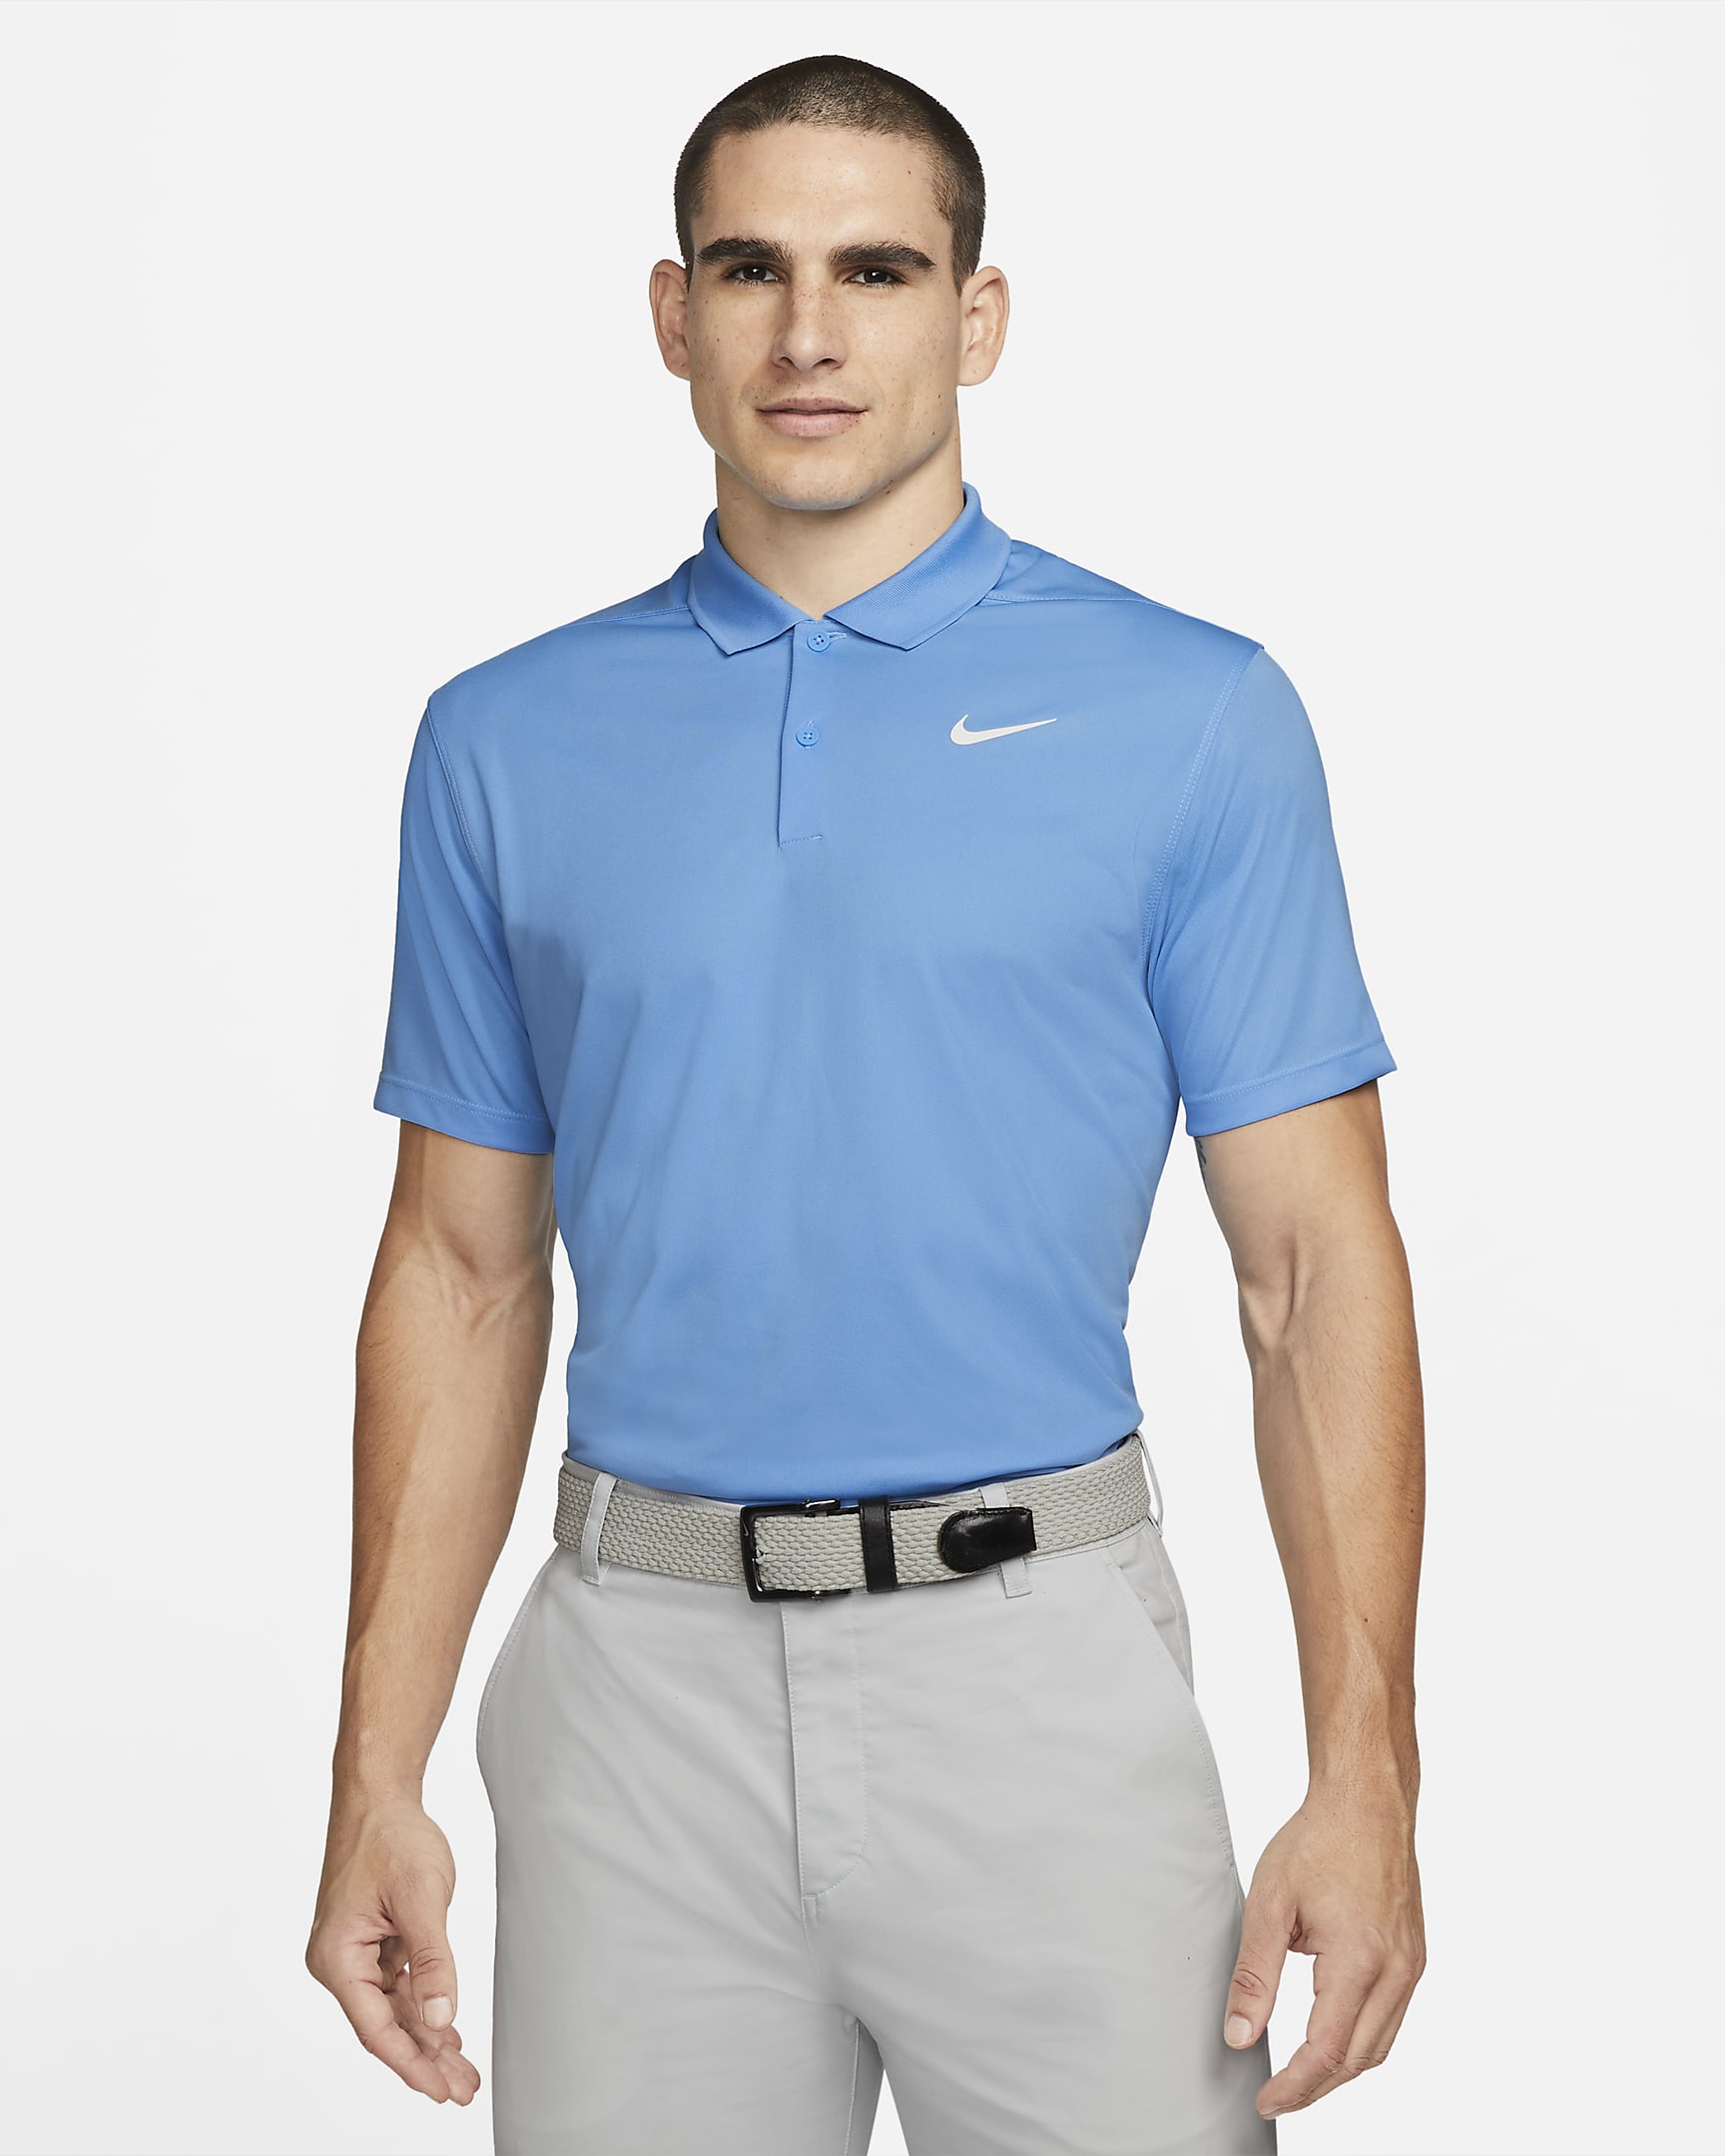 Nike Dri-FIT Victory Men's Golf Polo - University Blue/White